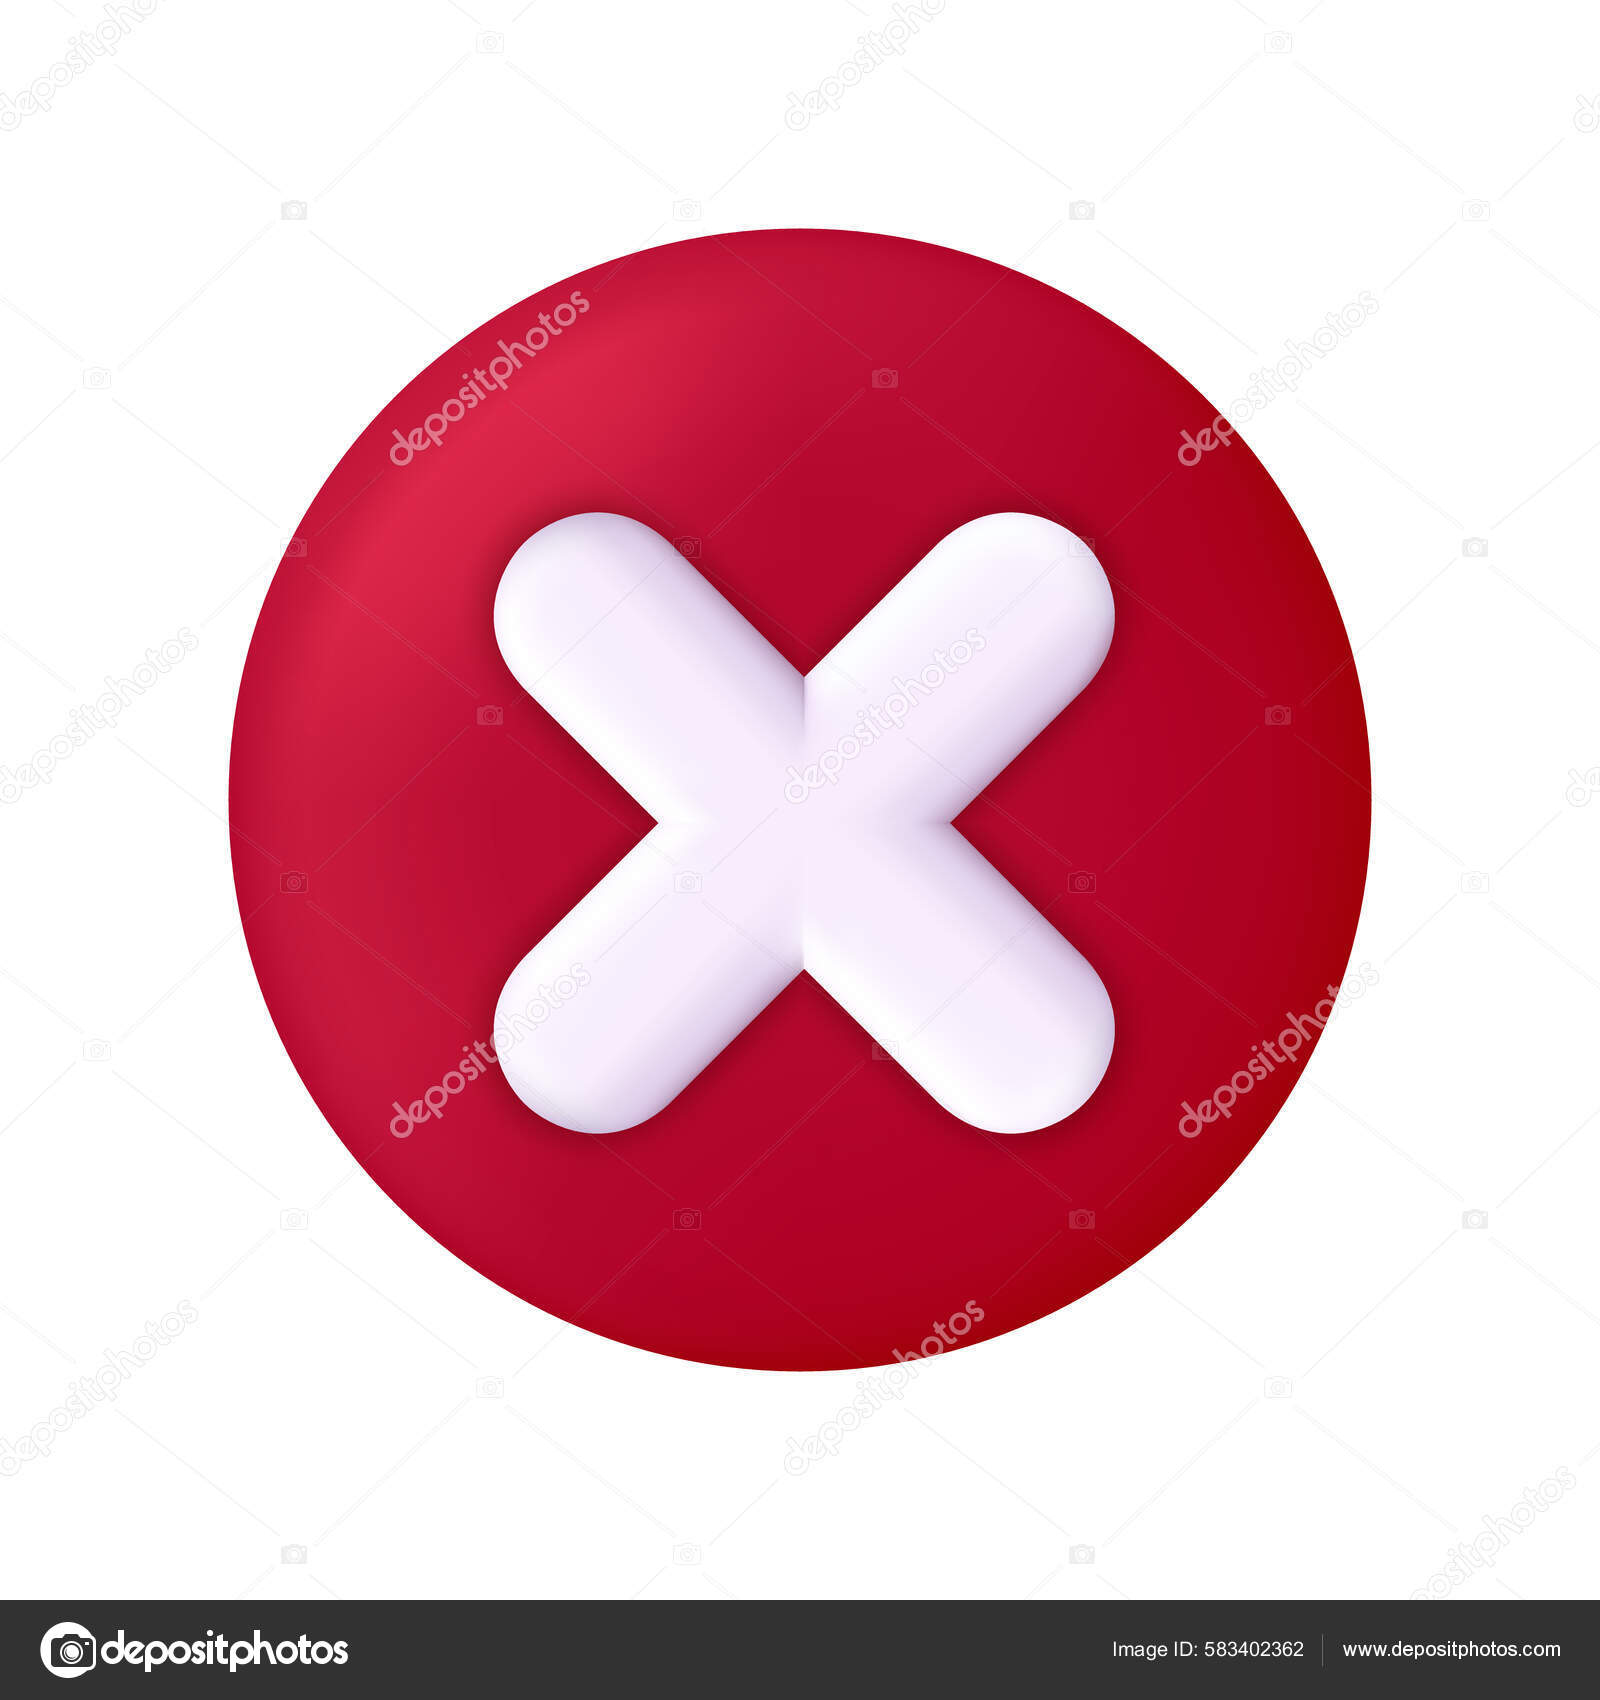 https://st.depositphotos.com/32466374/58340/v/1600/depositphotos_583402362-stock-illustration-cross-icon-button-wrong-check.jpg